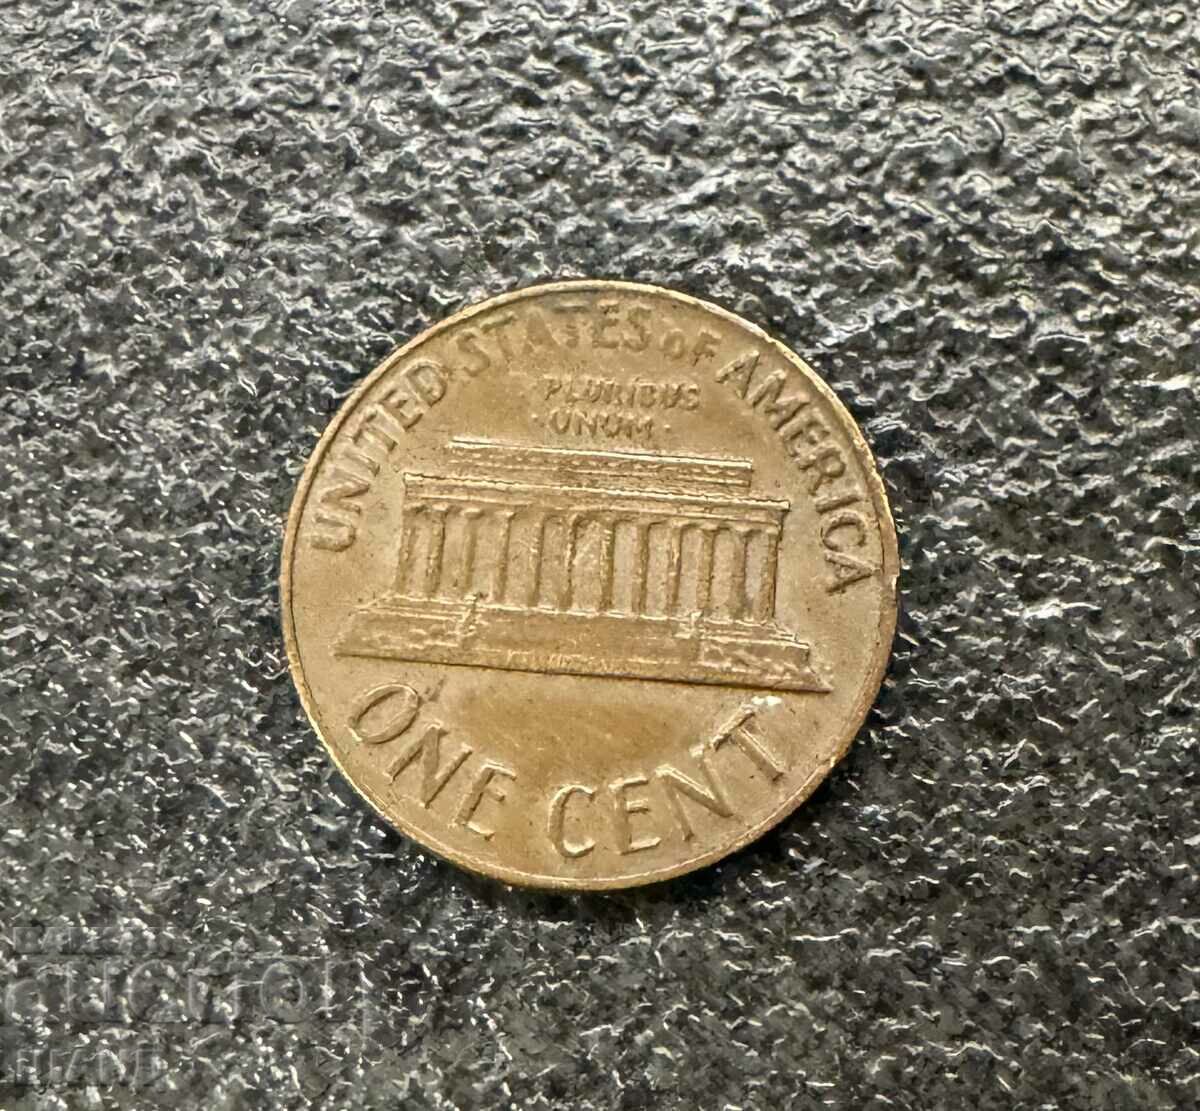 1971 USA 1 cent coin